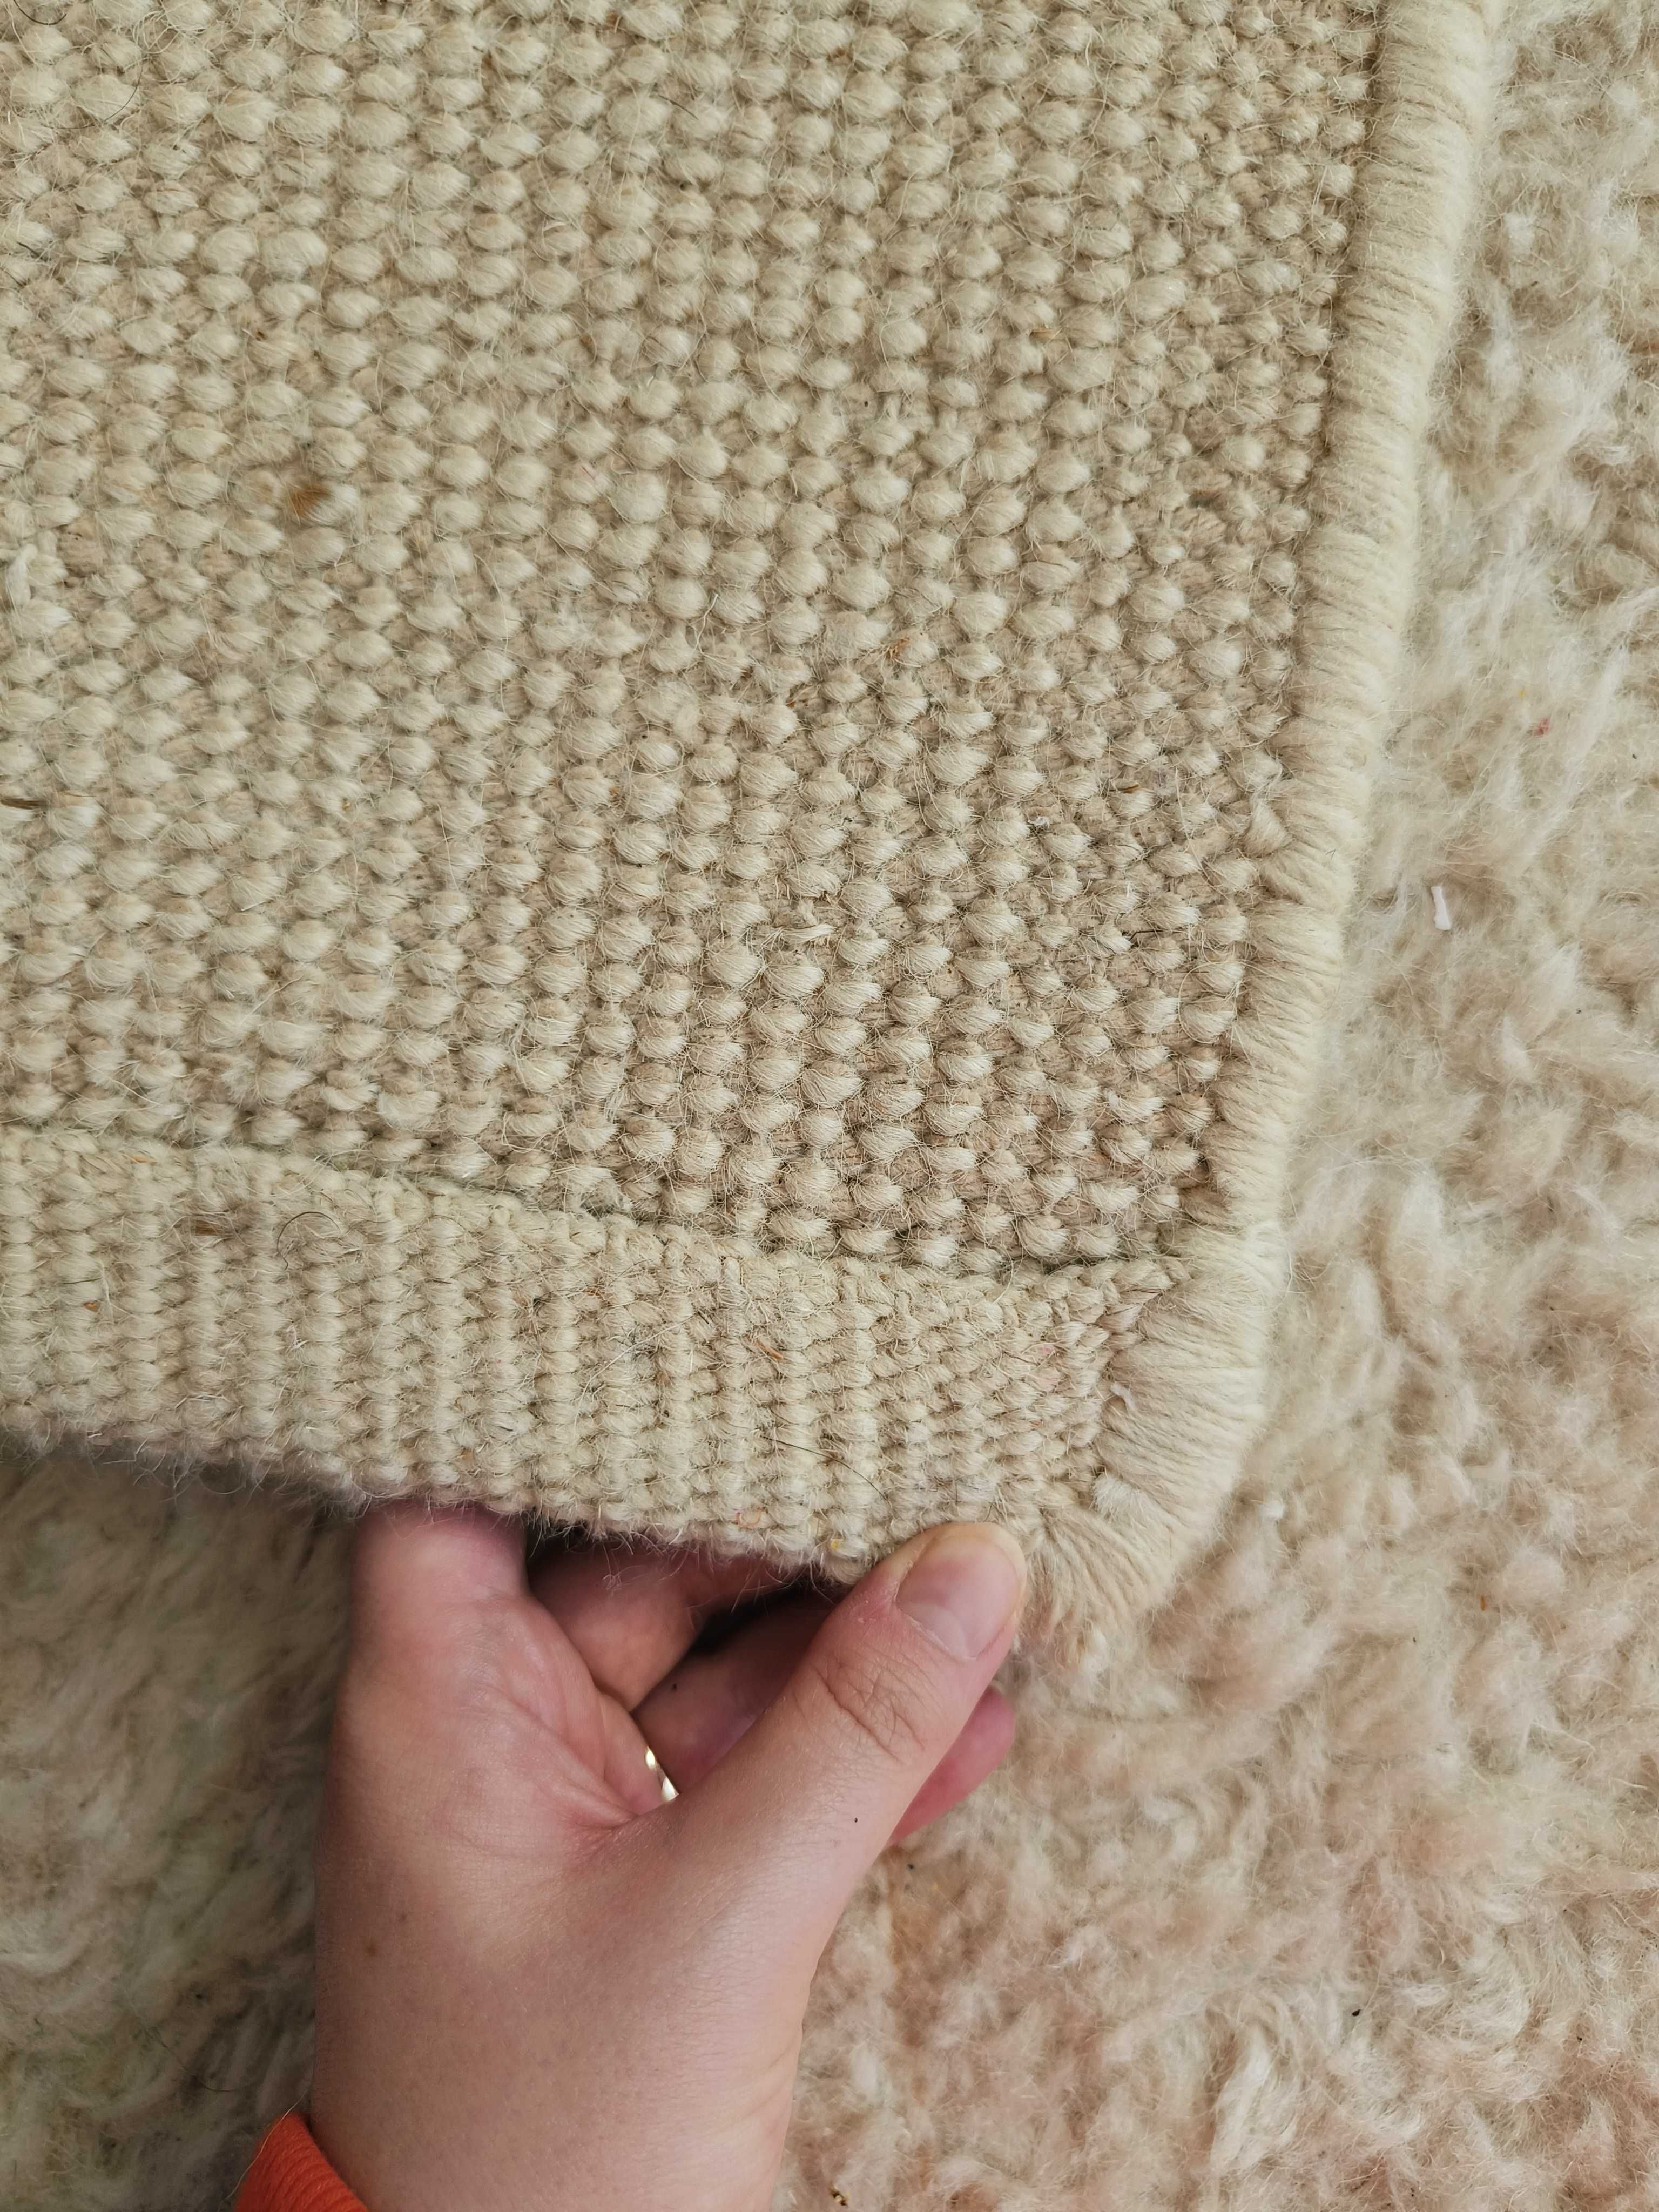 Covor mare de lana naturala bej, necolorat 200x300 cm